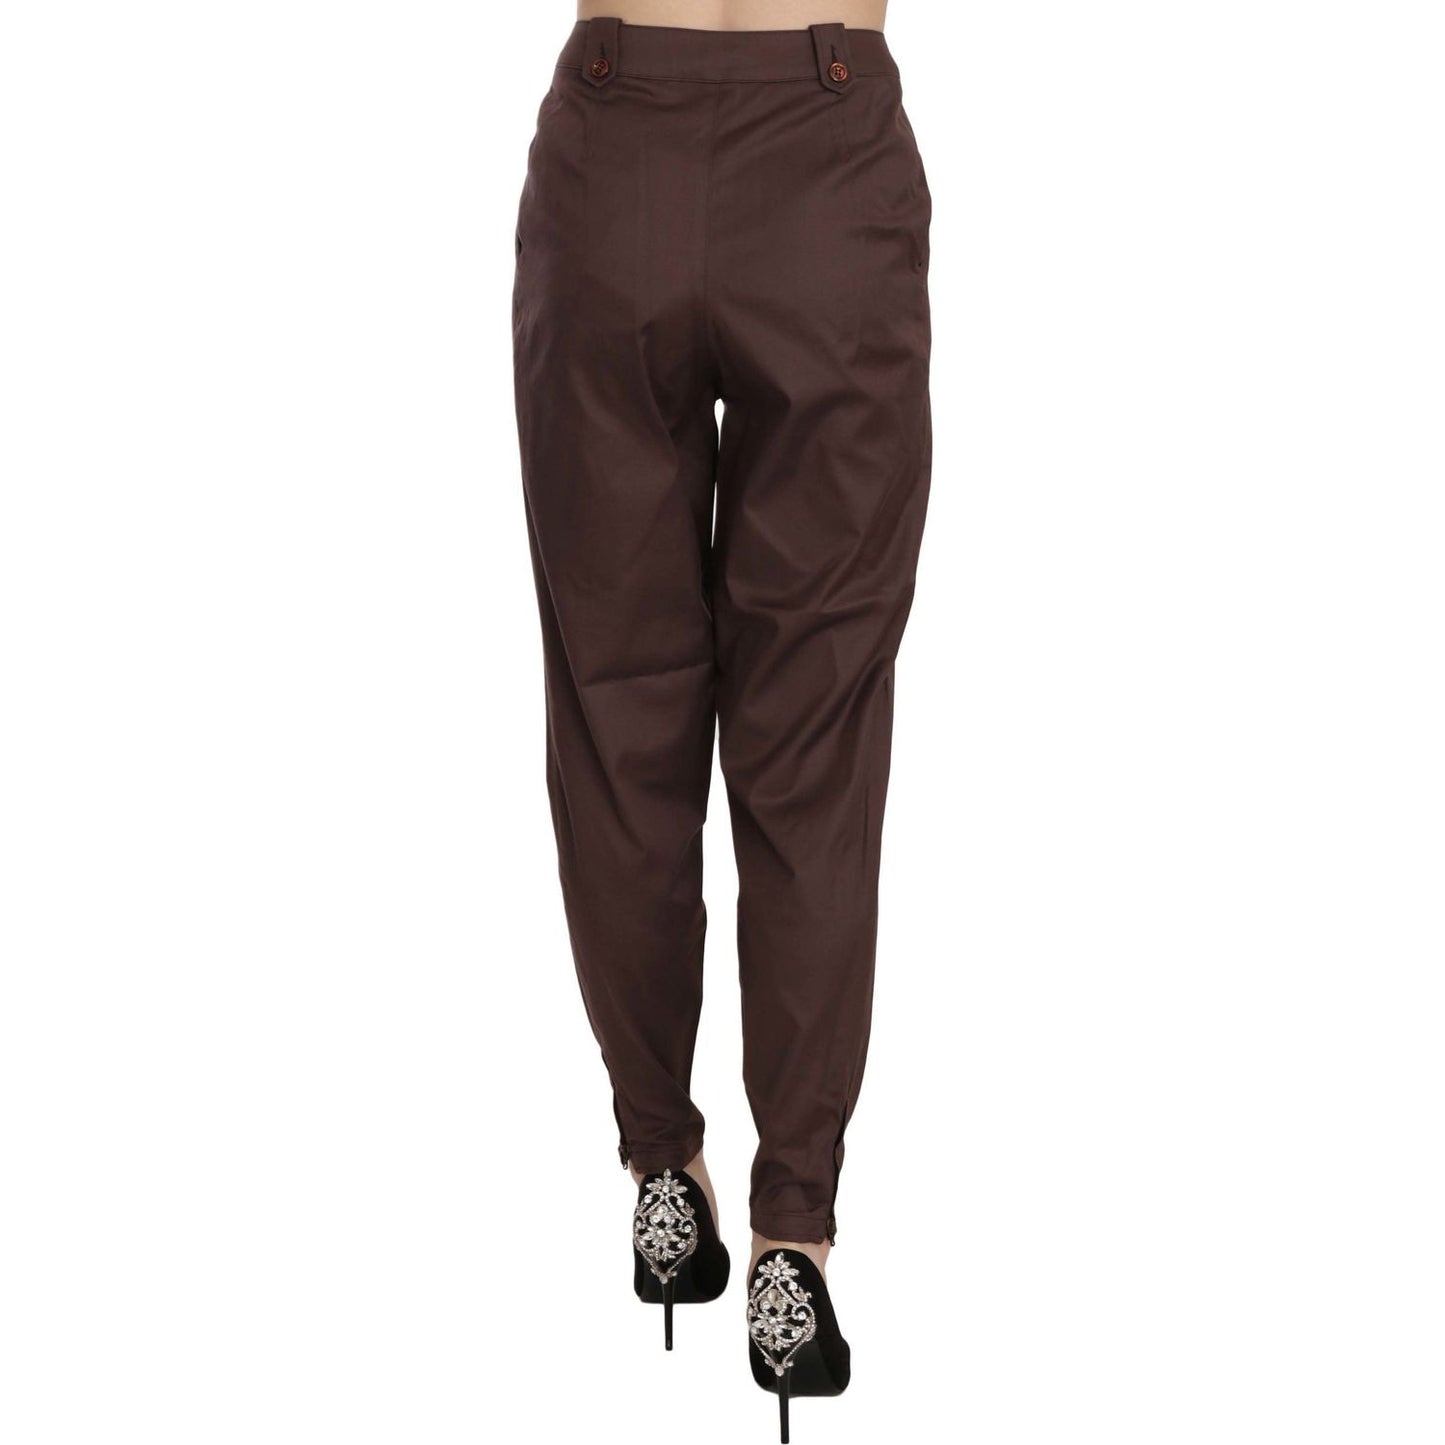 Just Cavalli High Waist Tapered Chic Formal Pants brown-high-waist-tapered-formal-trousers-pants